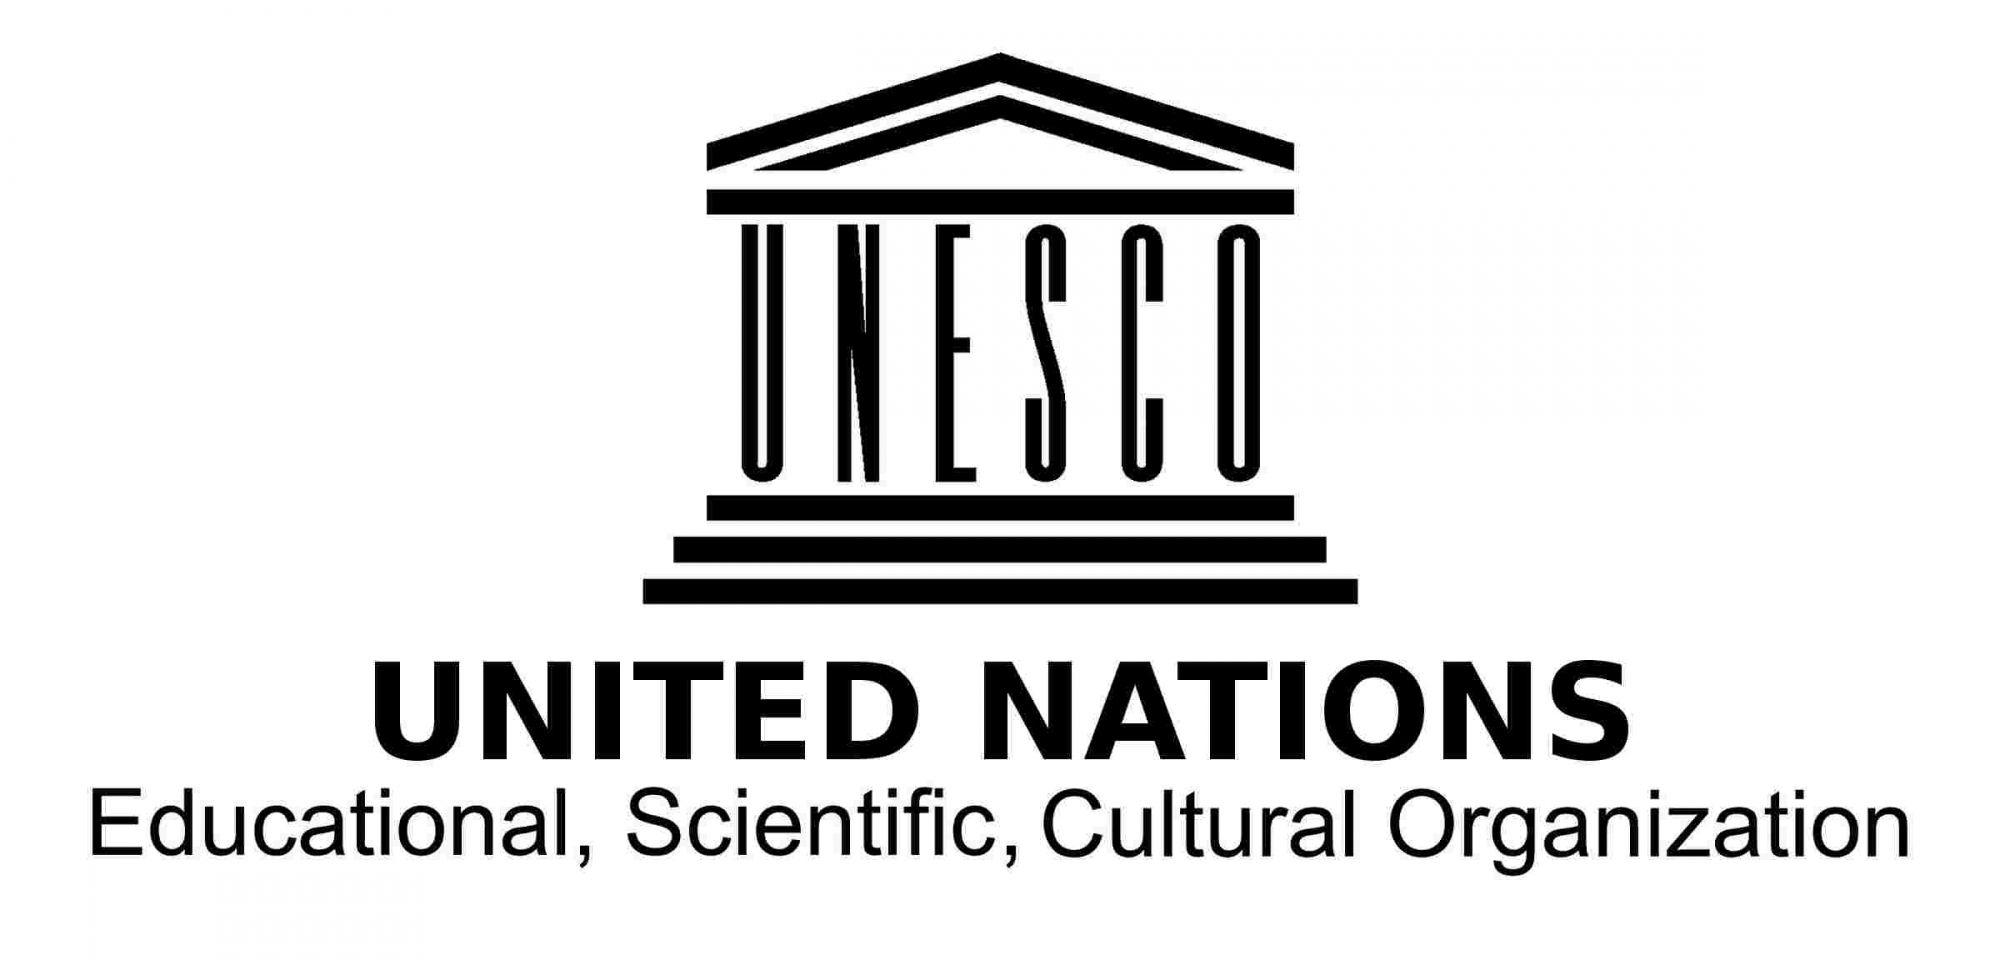 UNESCO Logo - Image - Unesco-logo-10.jpg | Community Central | FANDOM powered by Wikia